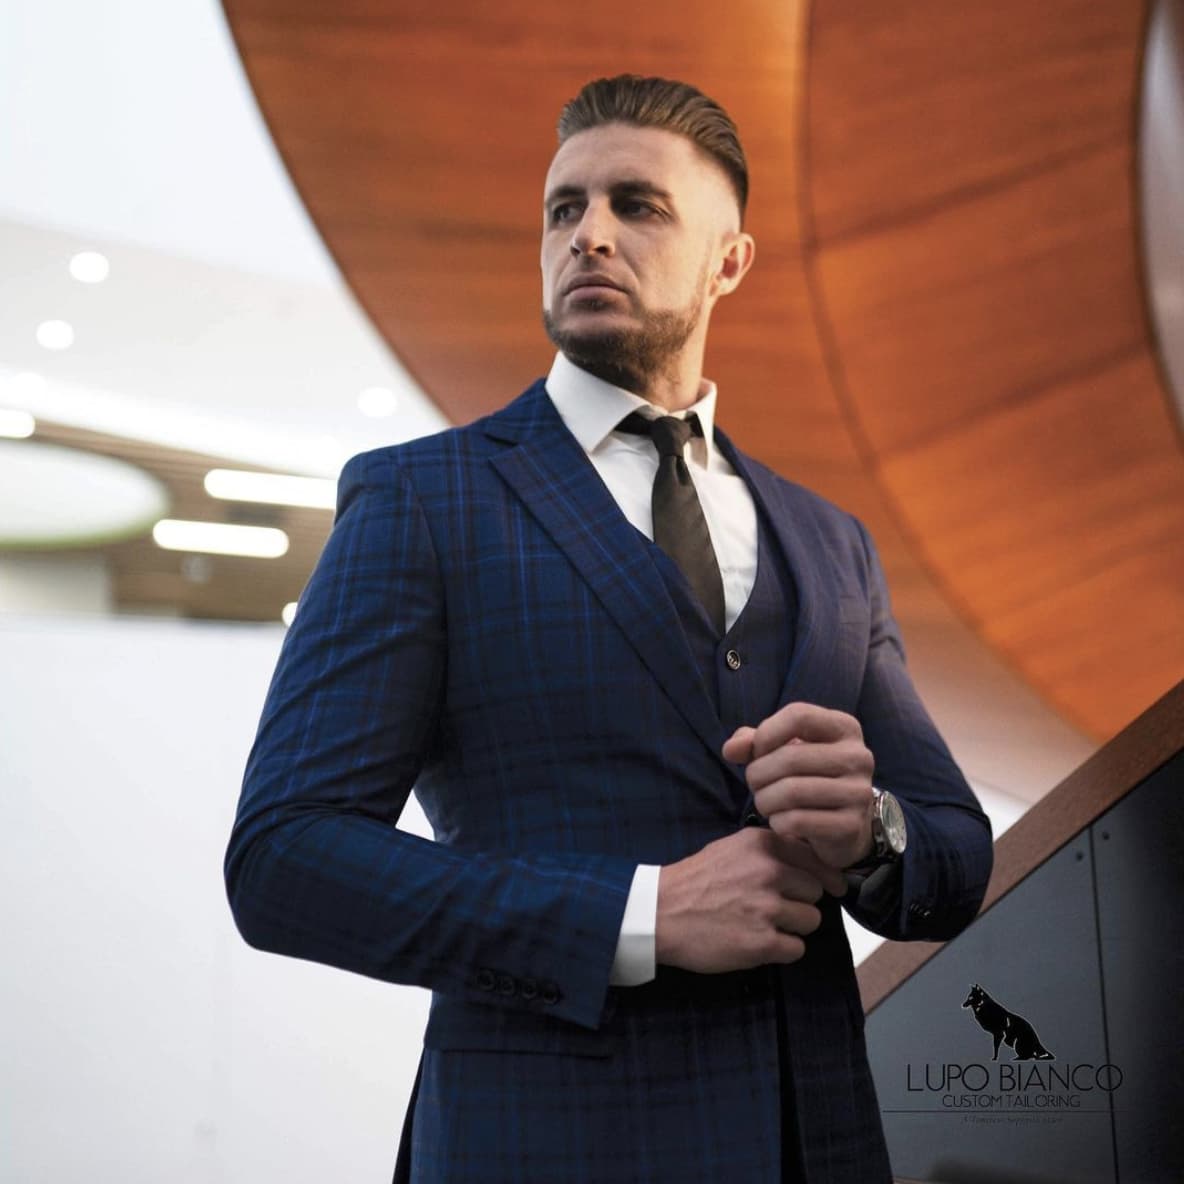 Tailored Formal Suits, Brisbane, Wil Valor